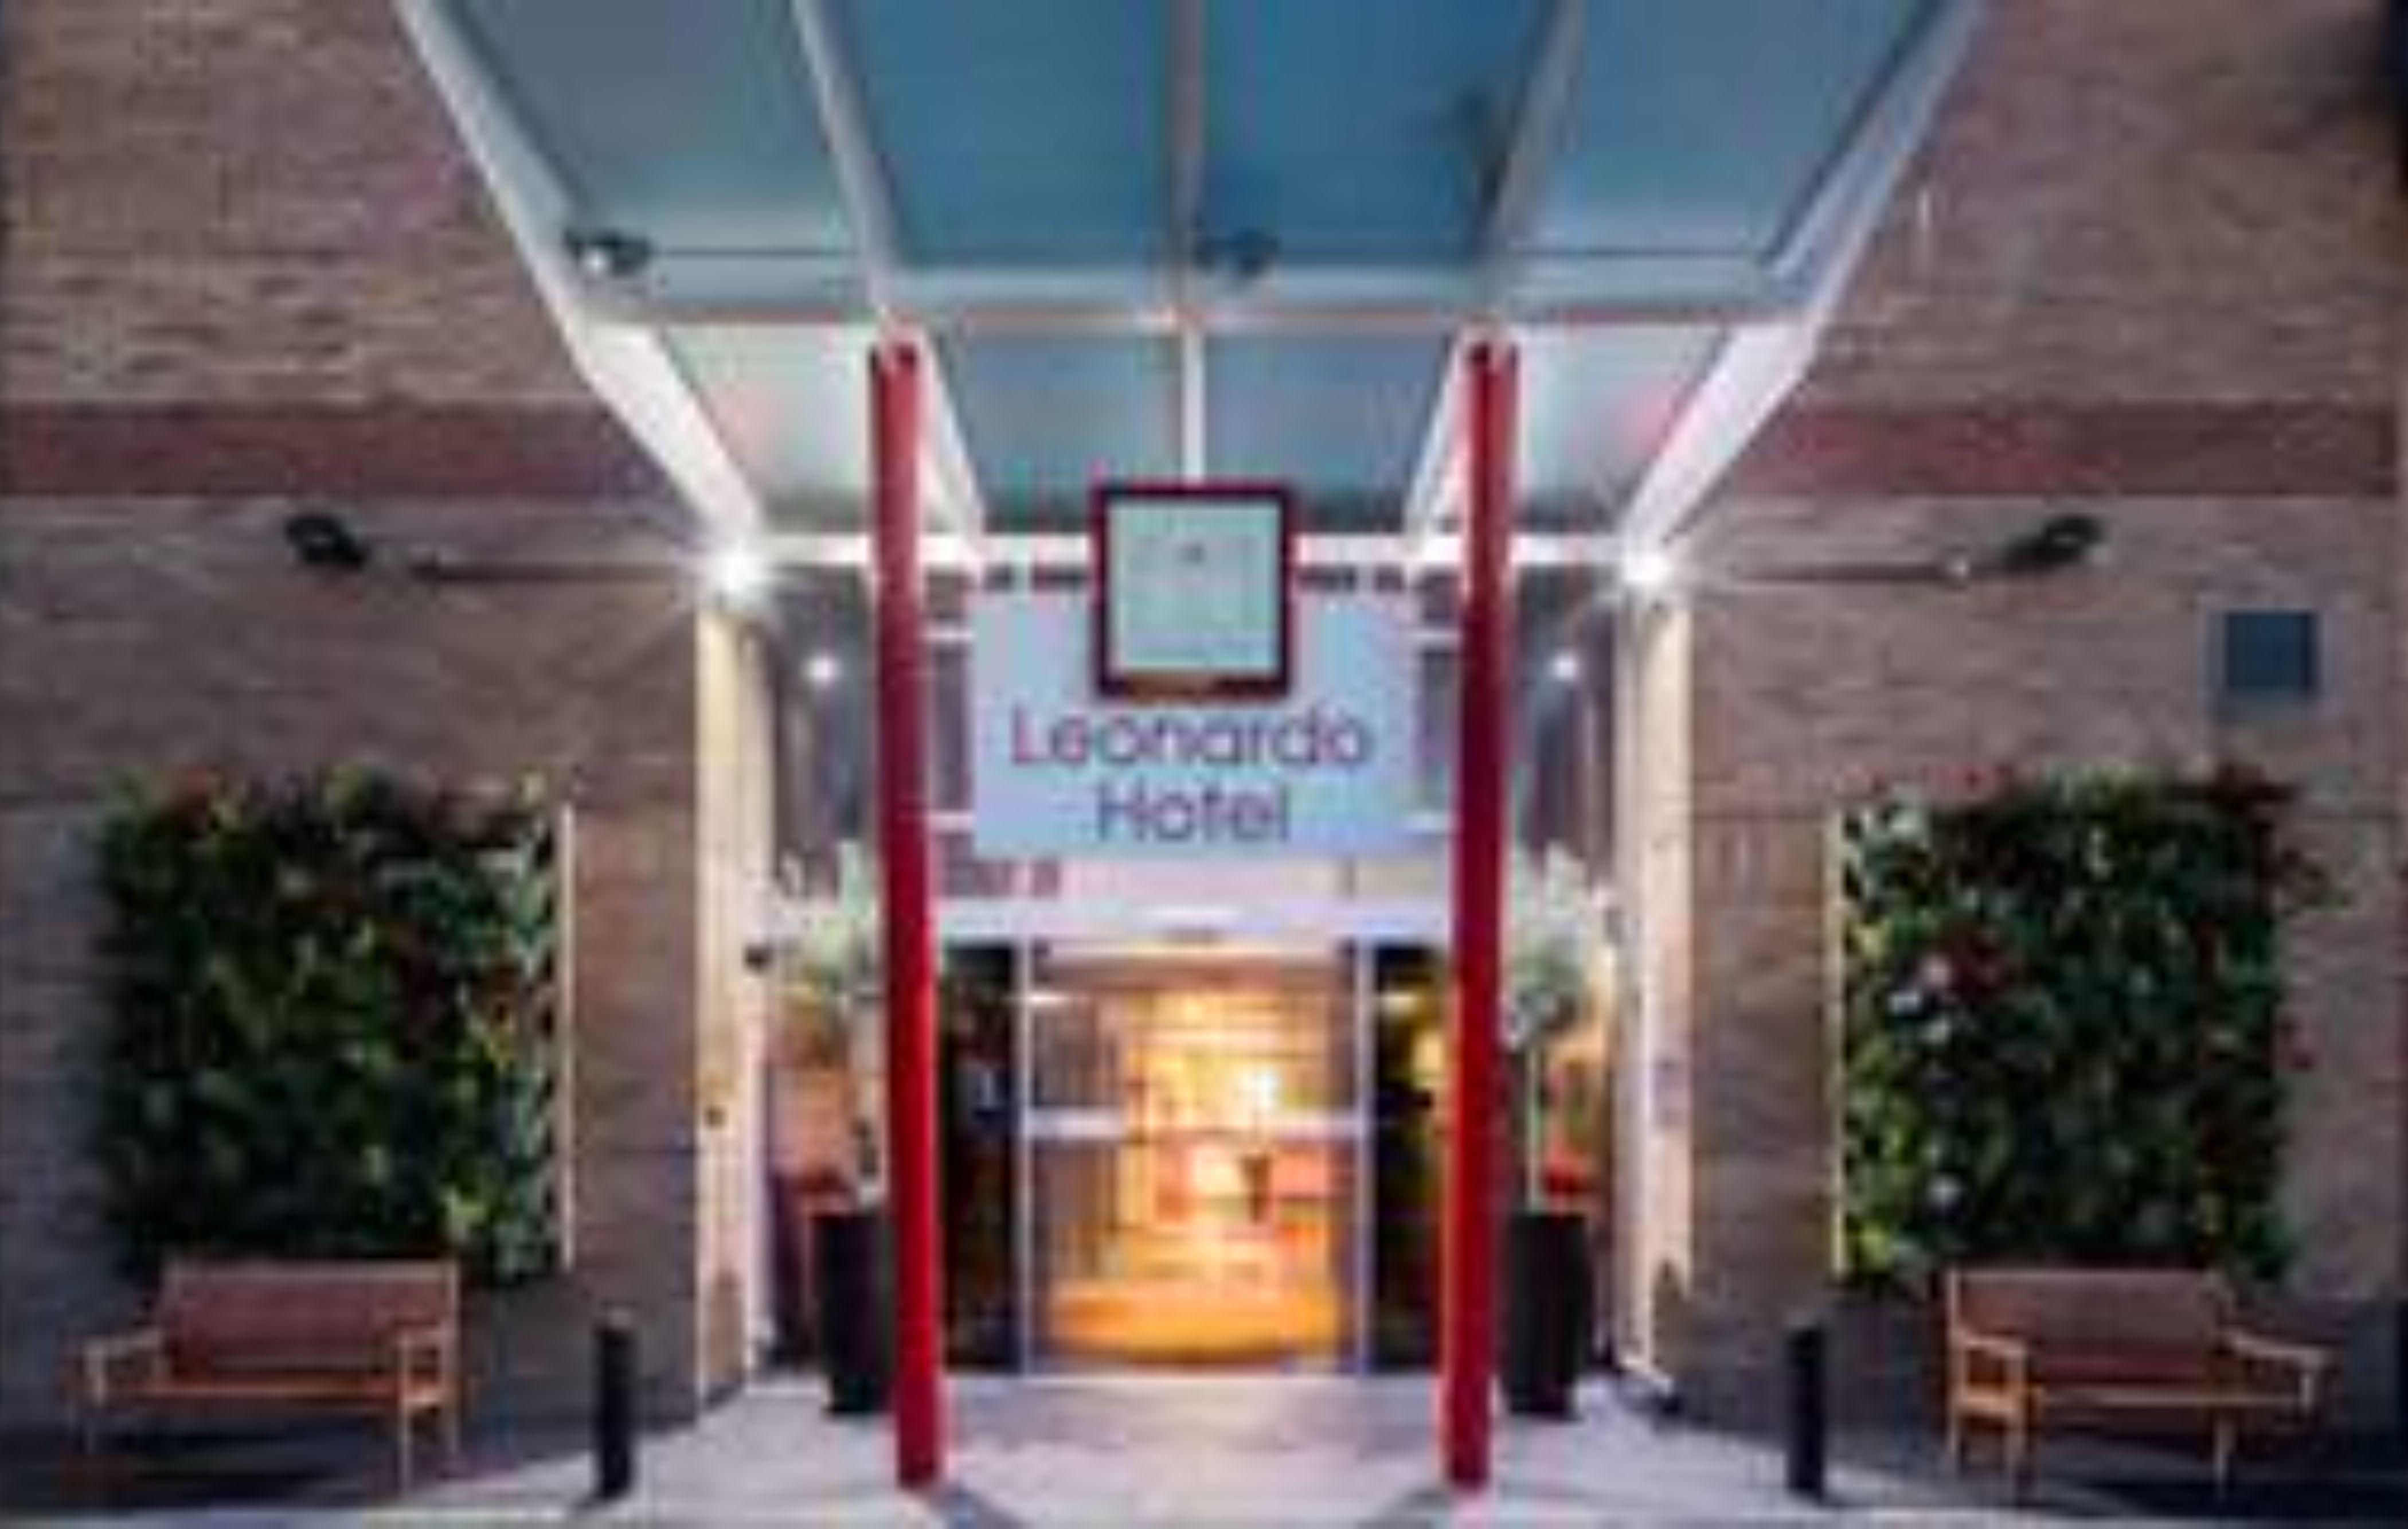 Leonardo Hotel London Heathrow Airport West Drayton 020 8990 0000